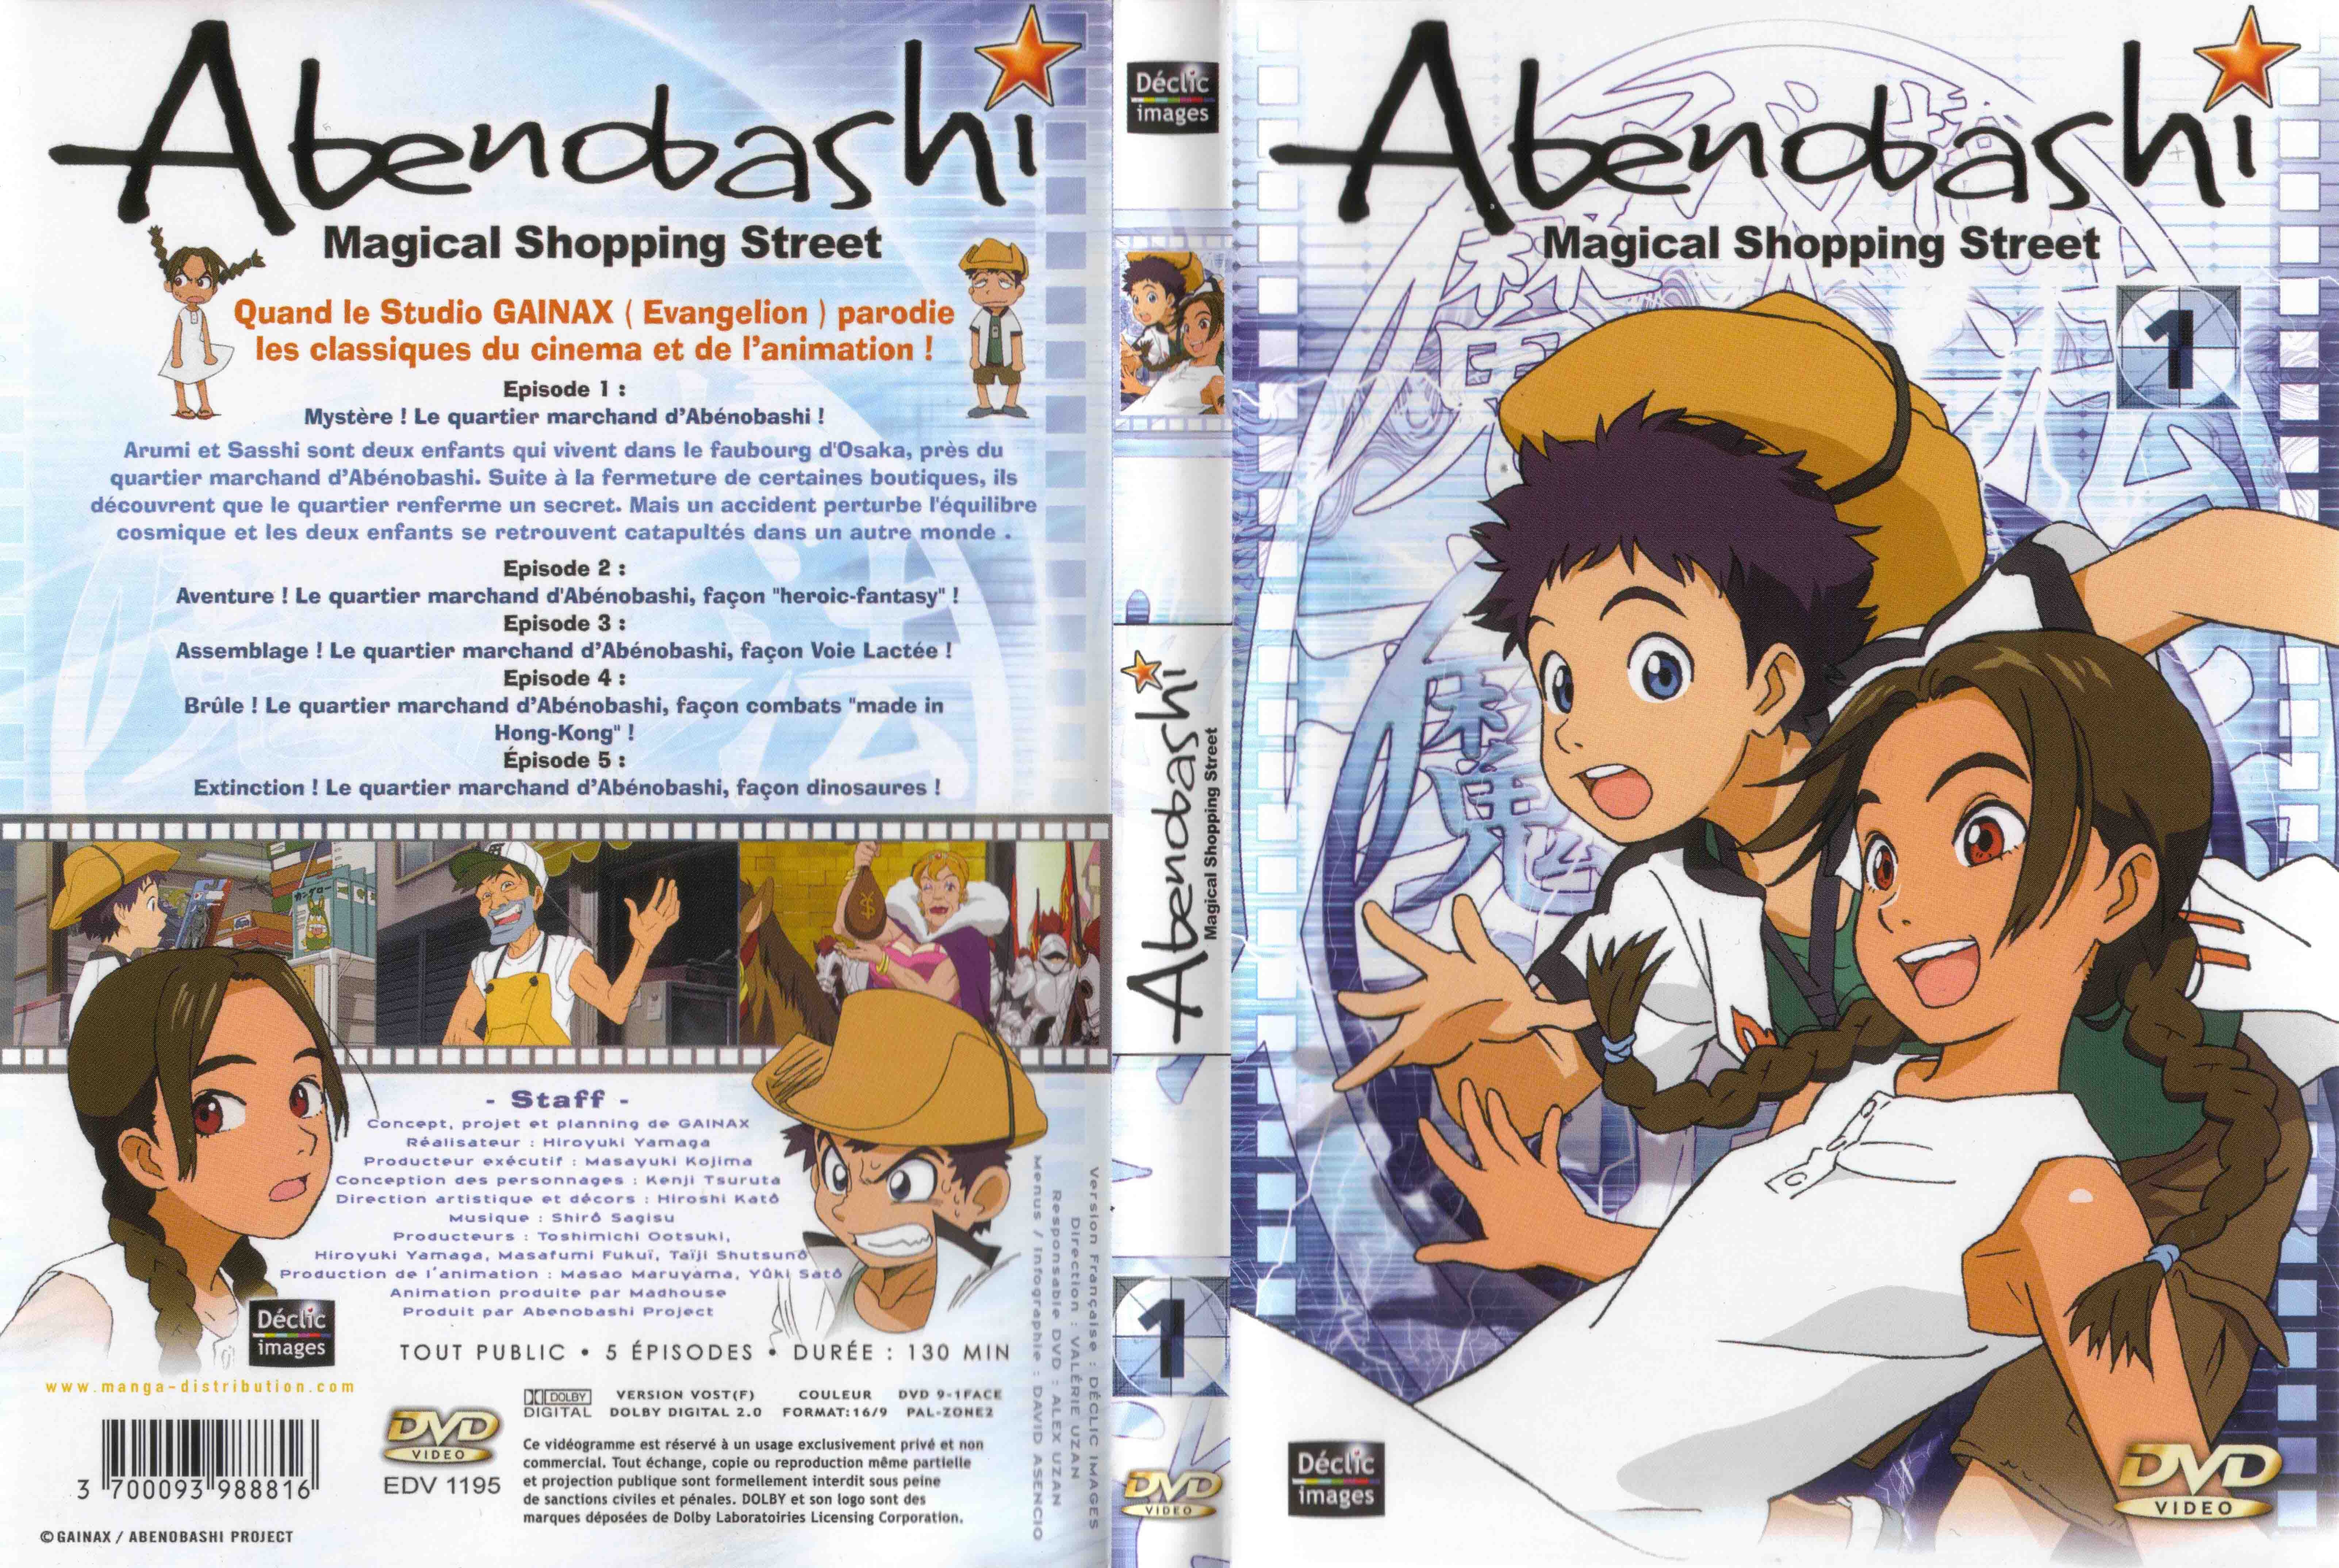 Jaquette DVD Abenobashi vol 1